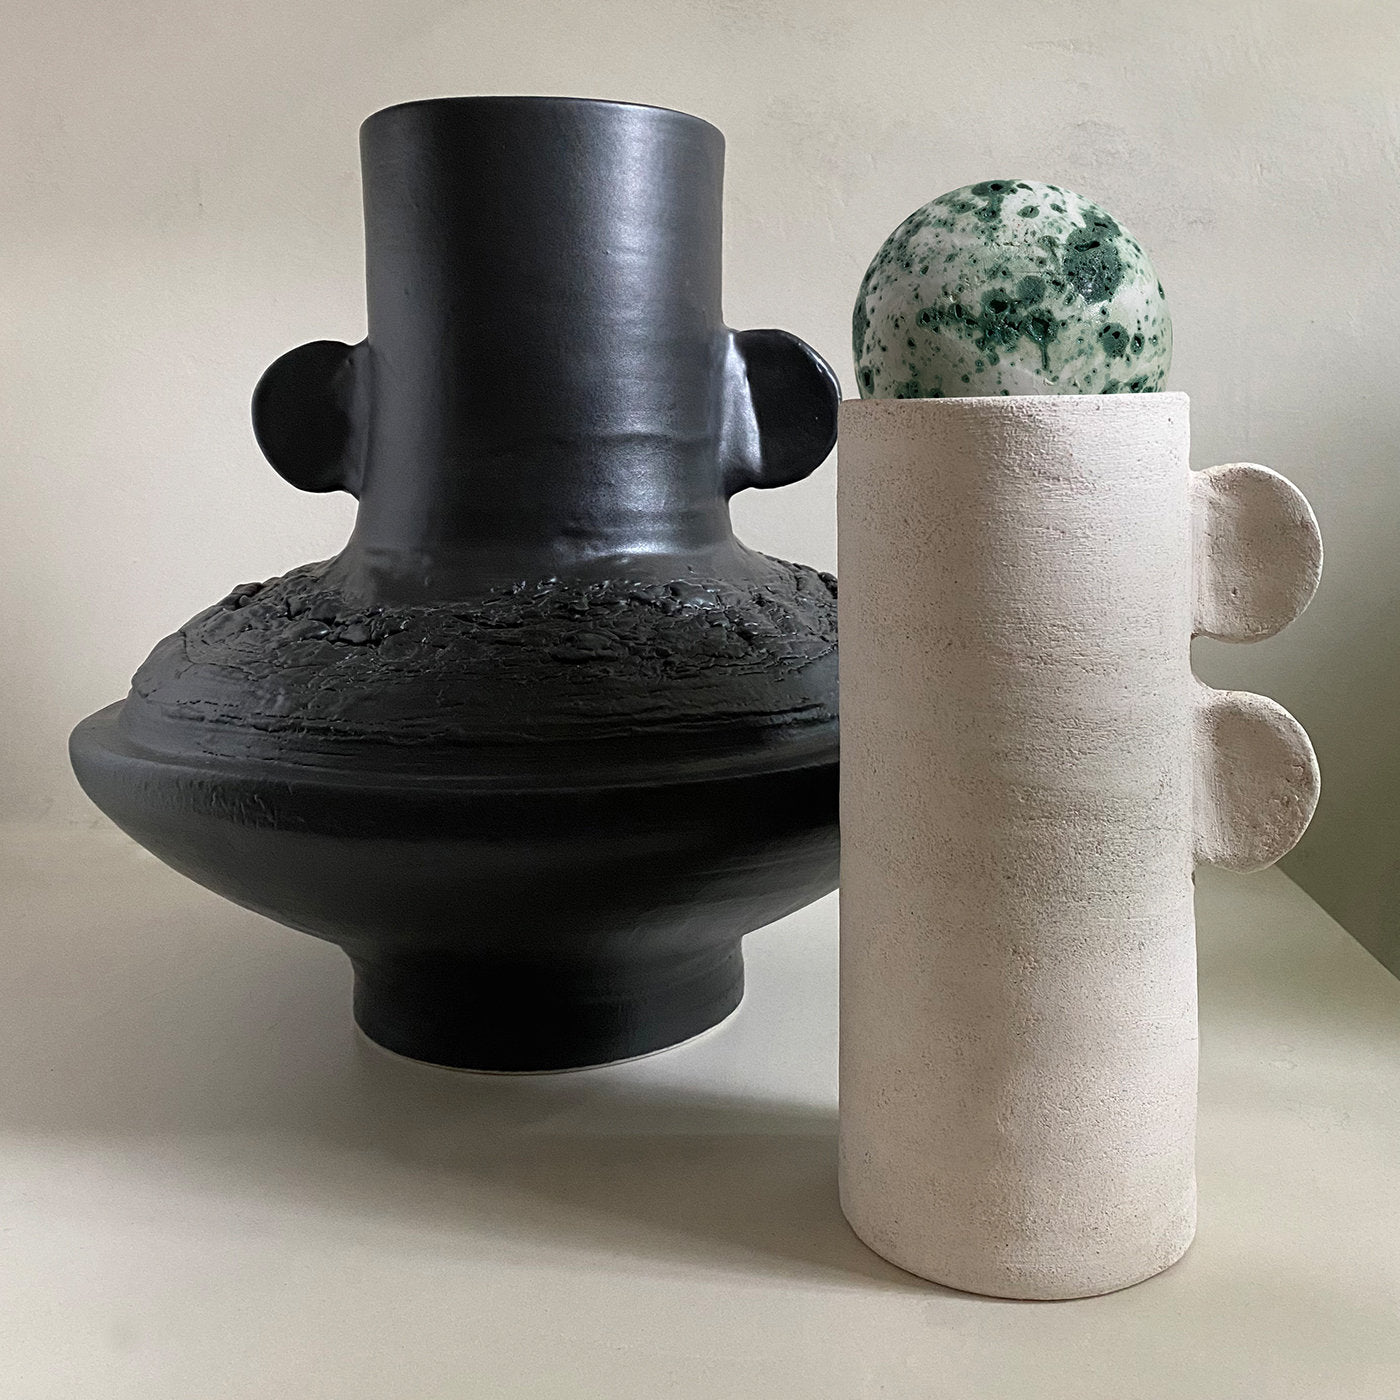 Origo 4 Vase by Stefania Loschi - Alternative view 2